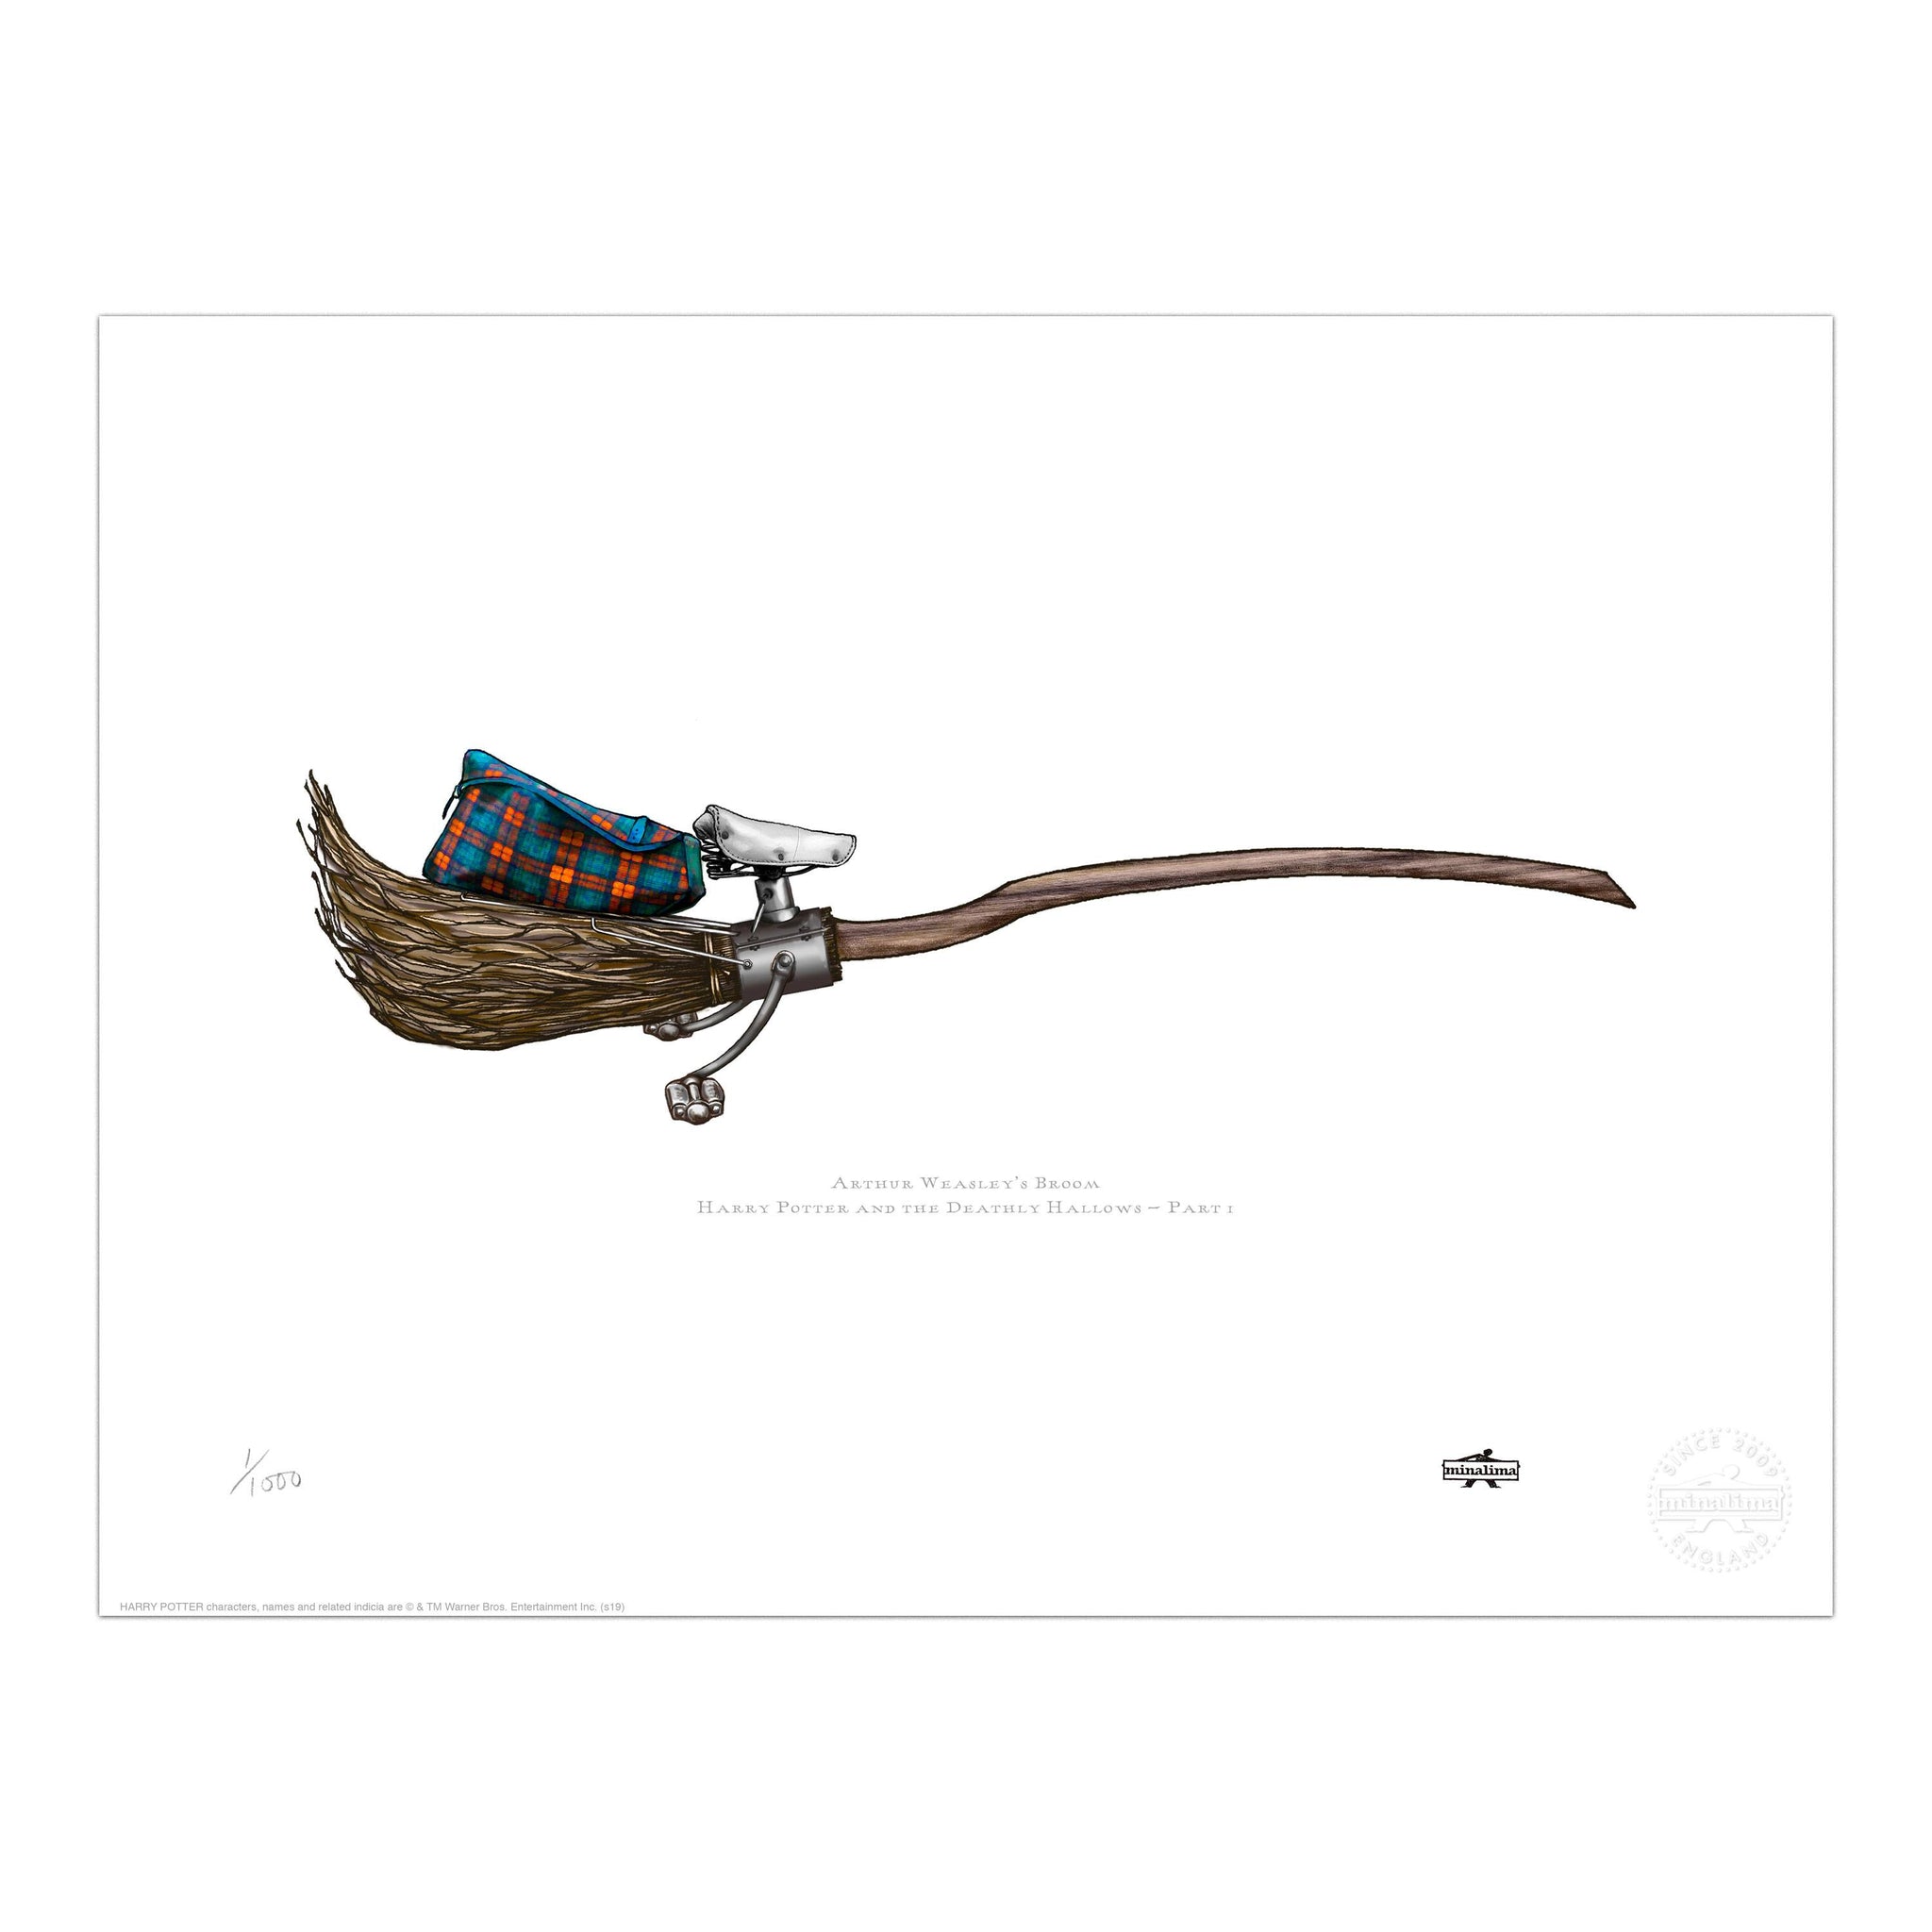 Arthur Weasley's Broom Limited Edition Art Print